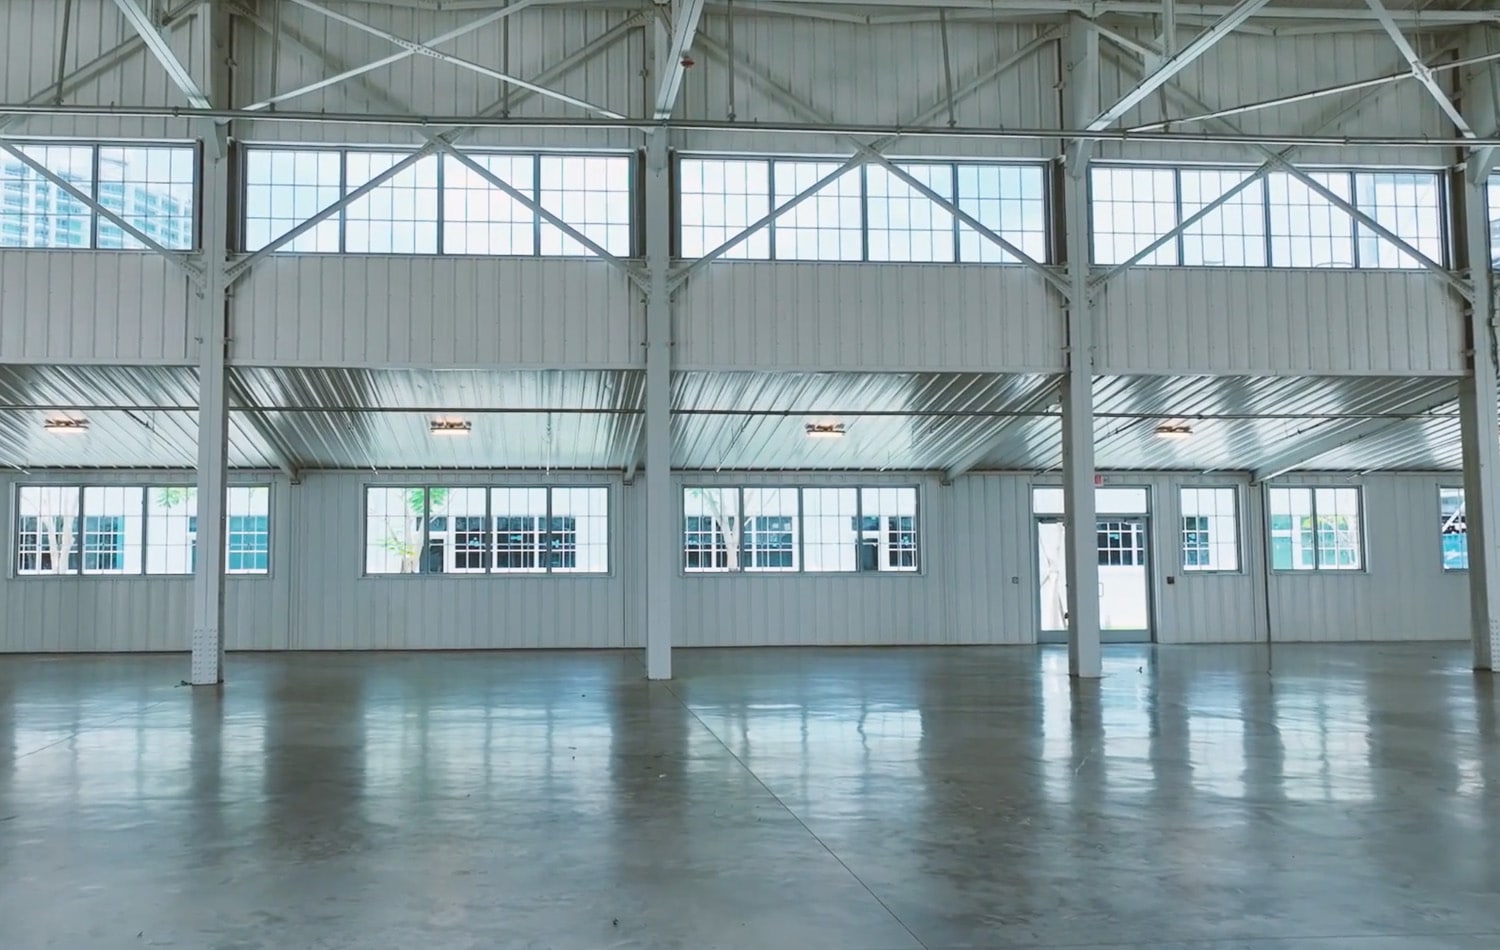 image of The Hangar